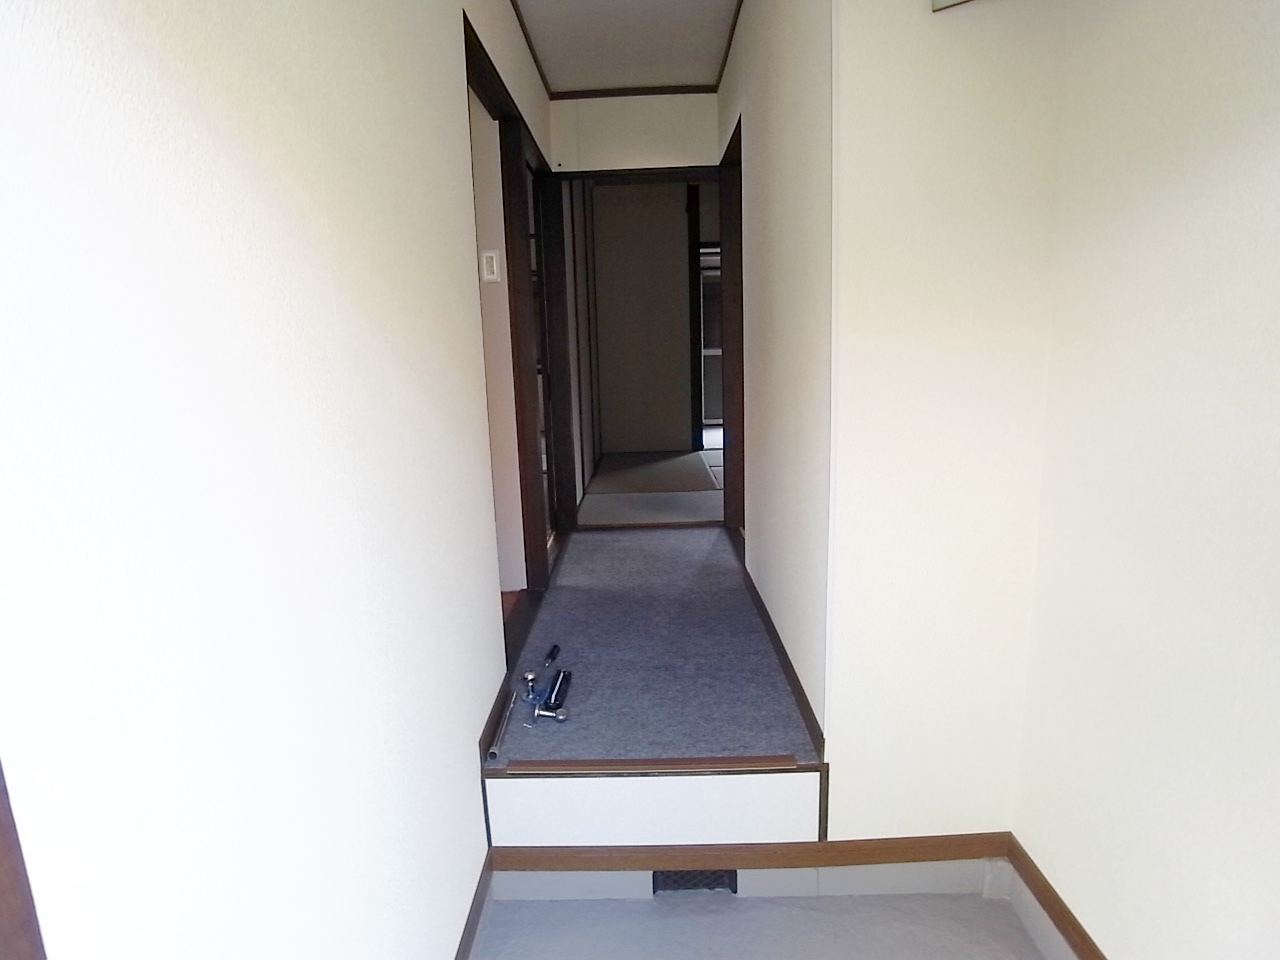 Other room space. Corridor carpet looks unusual ^^